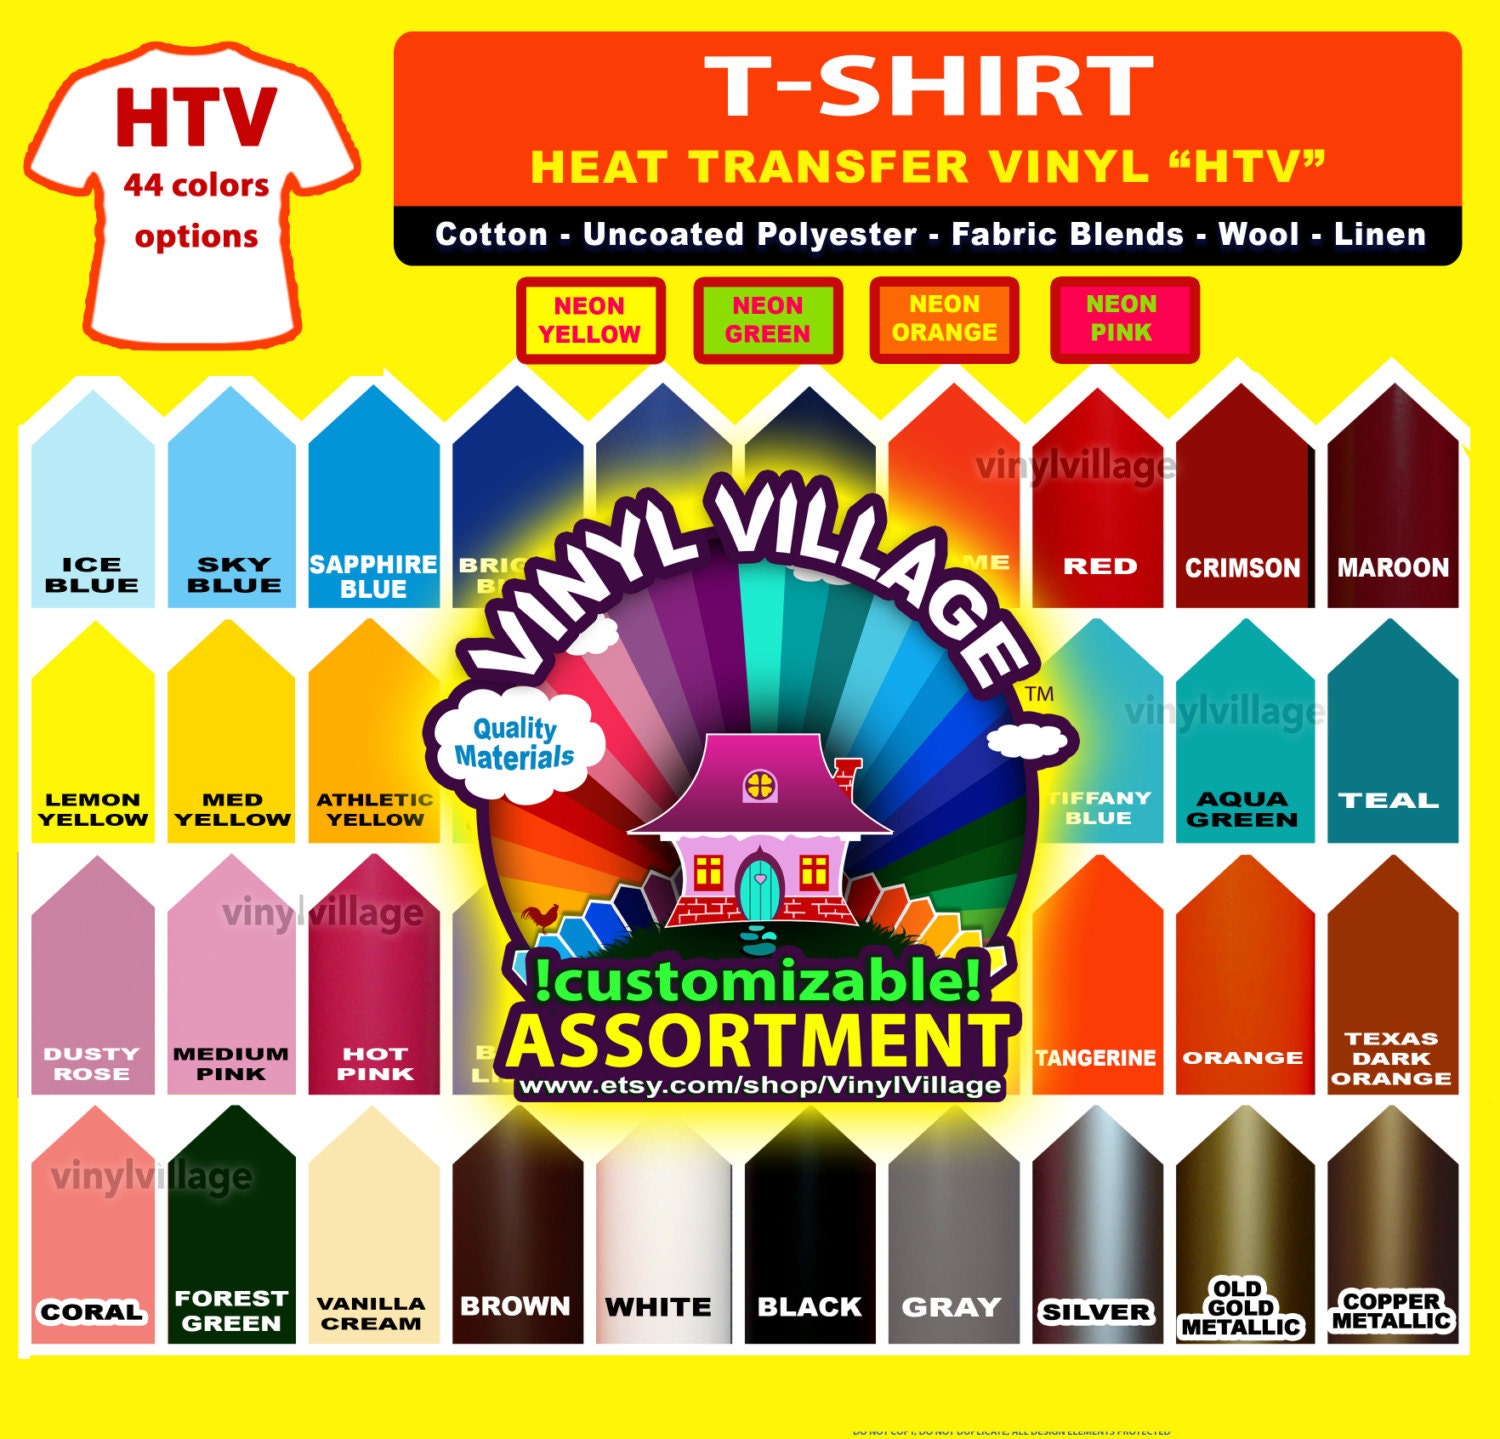 GYT Pink Heat Transfer Vinyl - Glossy Adhesive Pink Iron on Vinyl - 12 inch x 7 Feet Pink HTV Vinyl Heat Press DIY Design for T-Shirt (Pink)